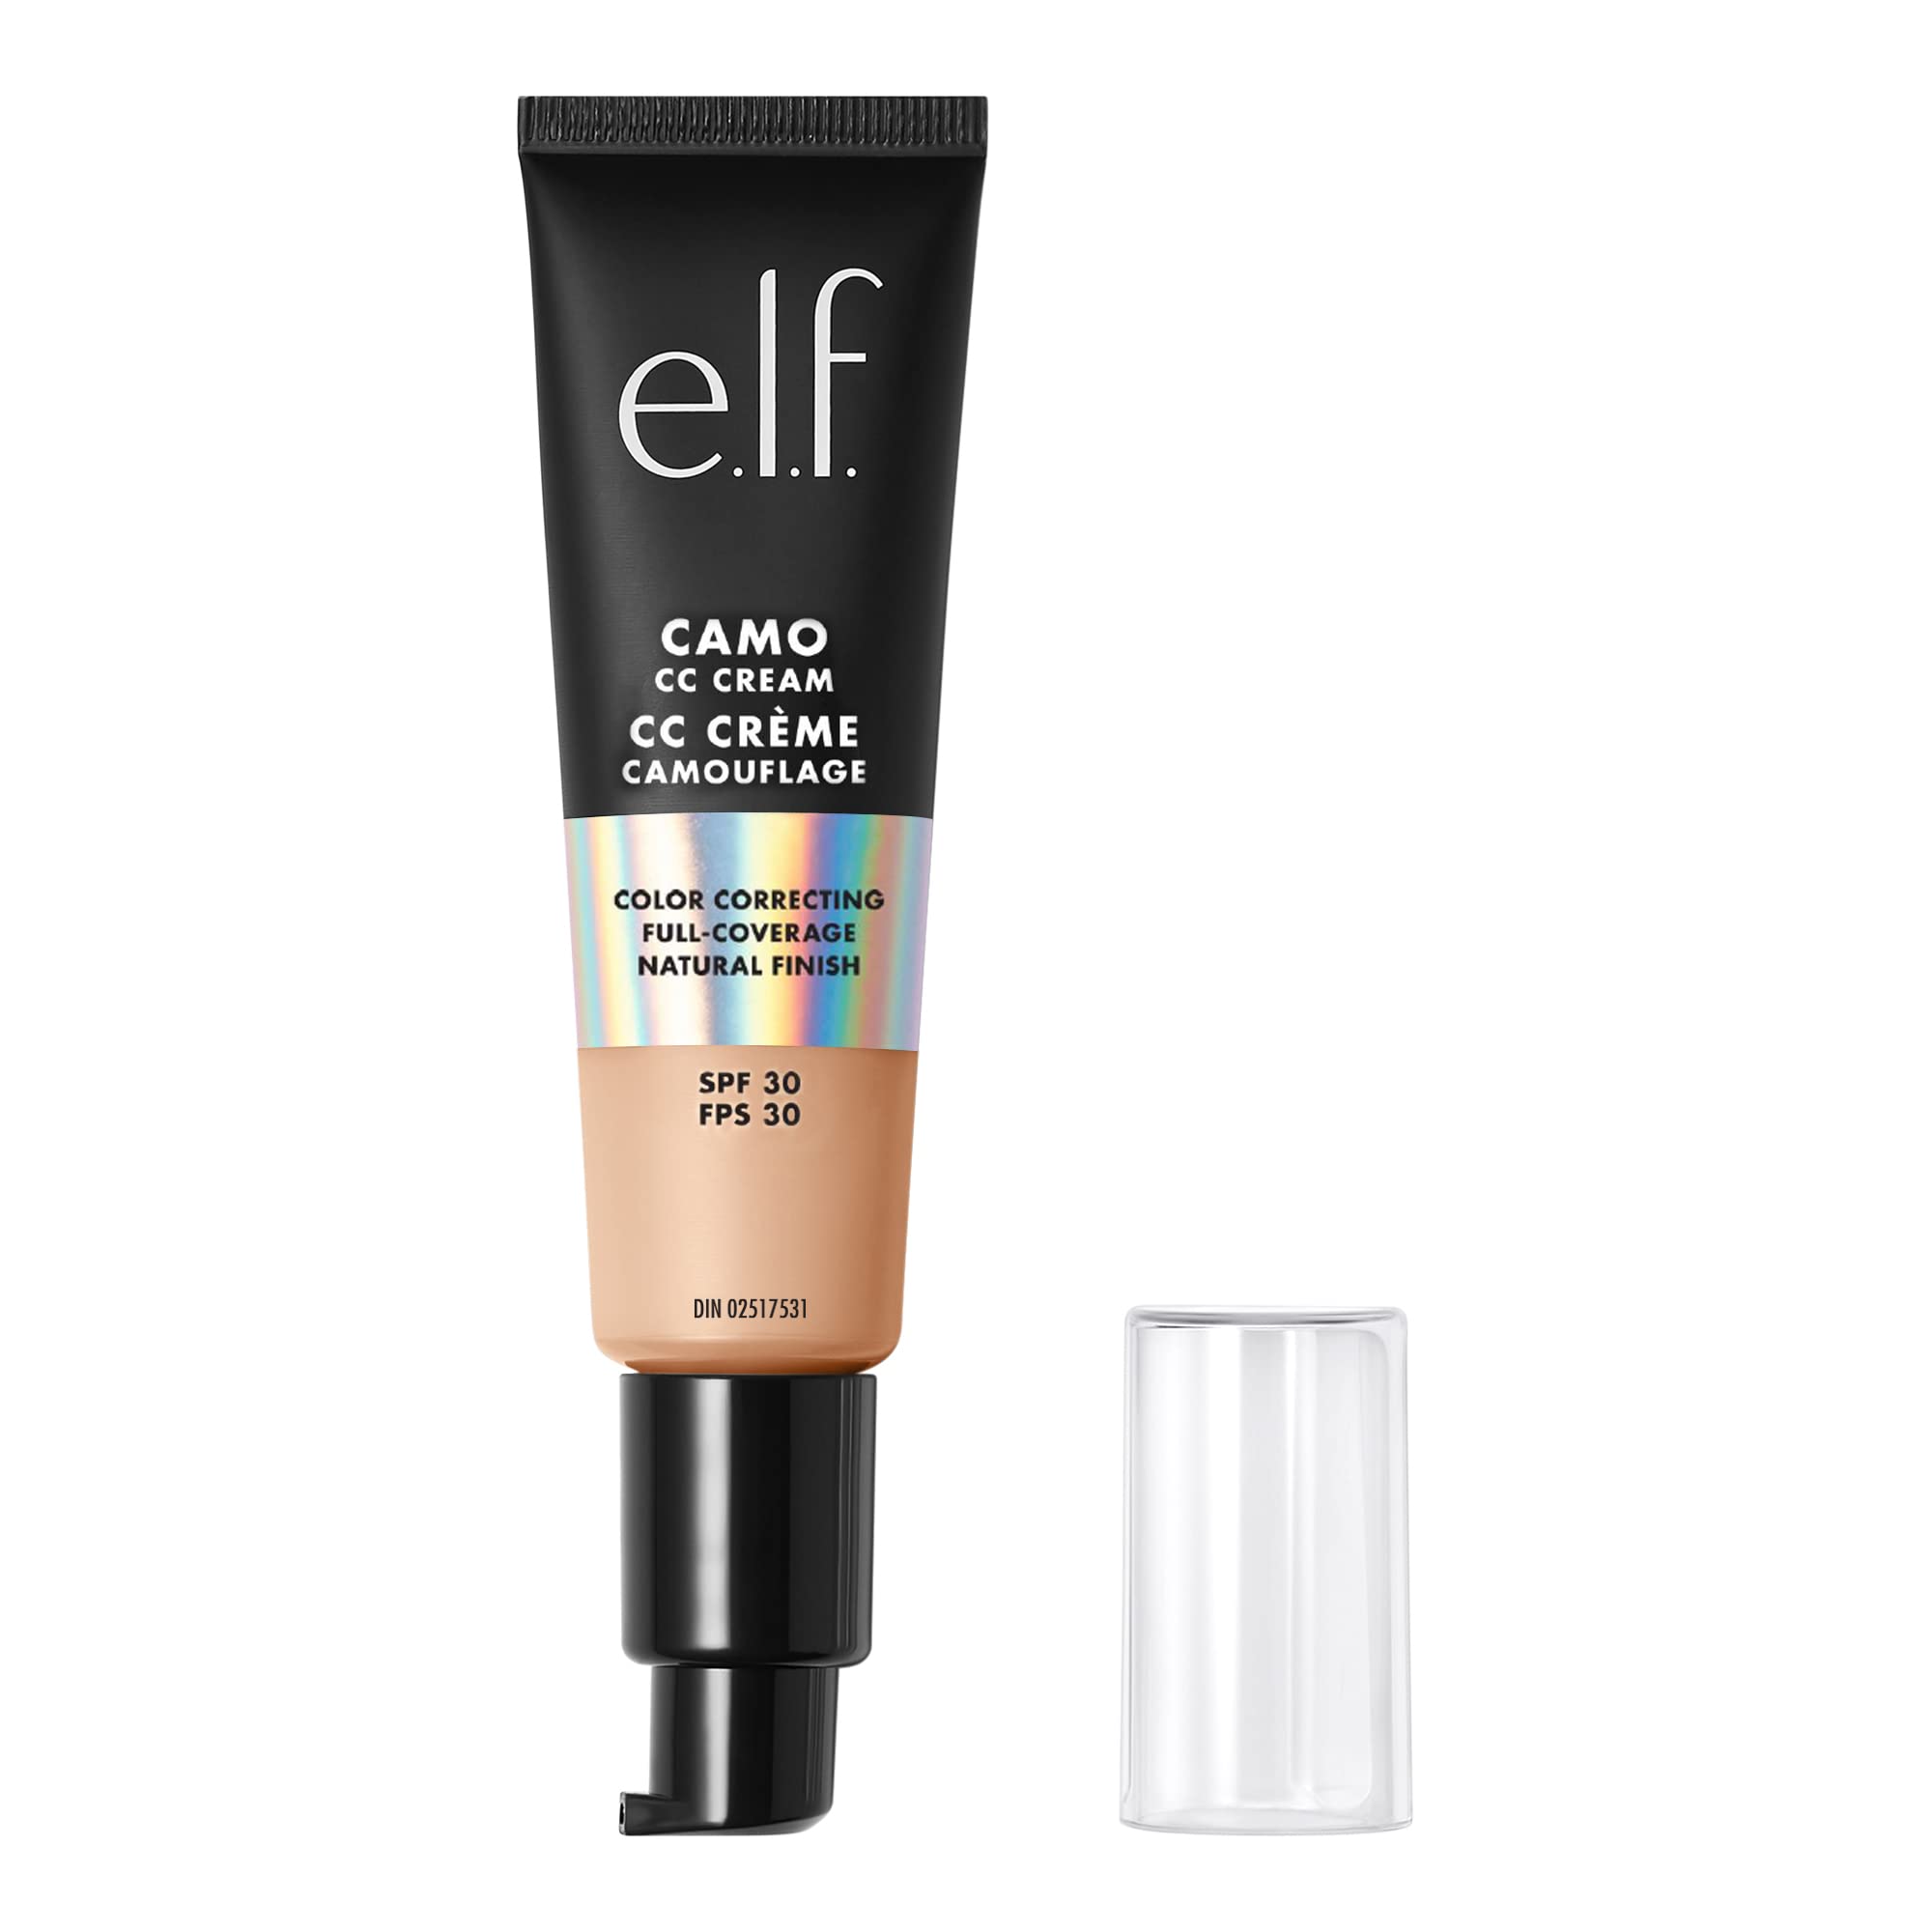 e.l.f. Camo CC Cream, Color Correcting Medium-To-Full Coverage Foundation with SPF 30, Light 210 N, 1.05 Oz (30g)